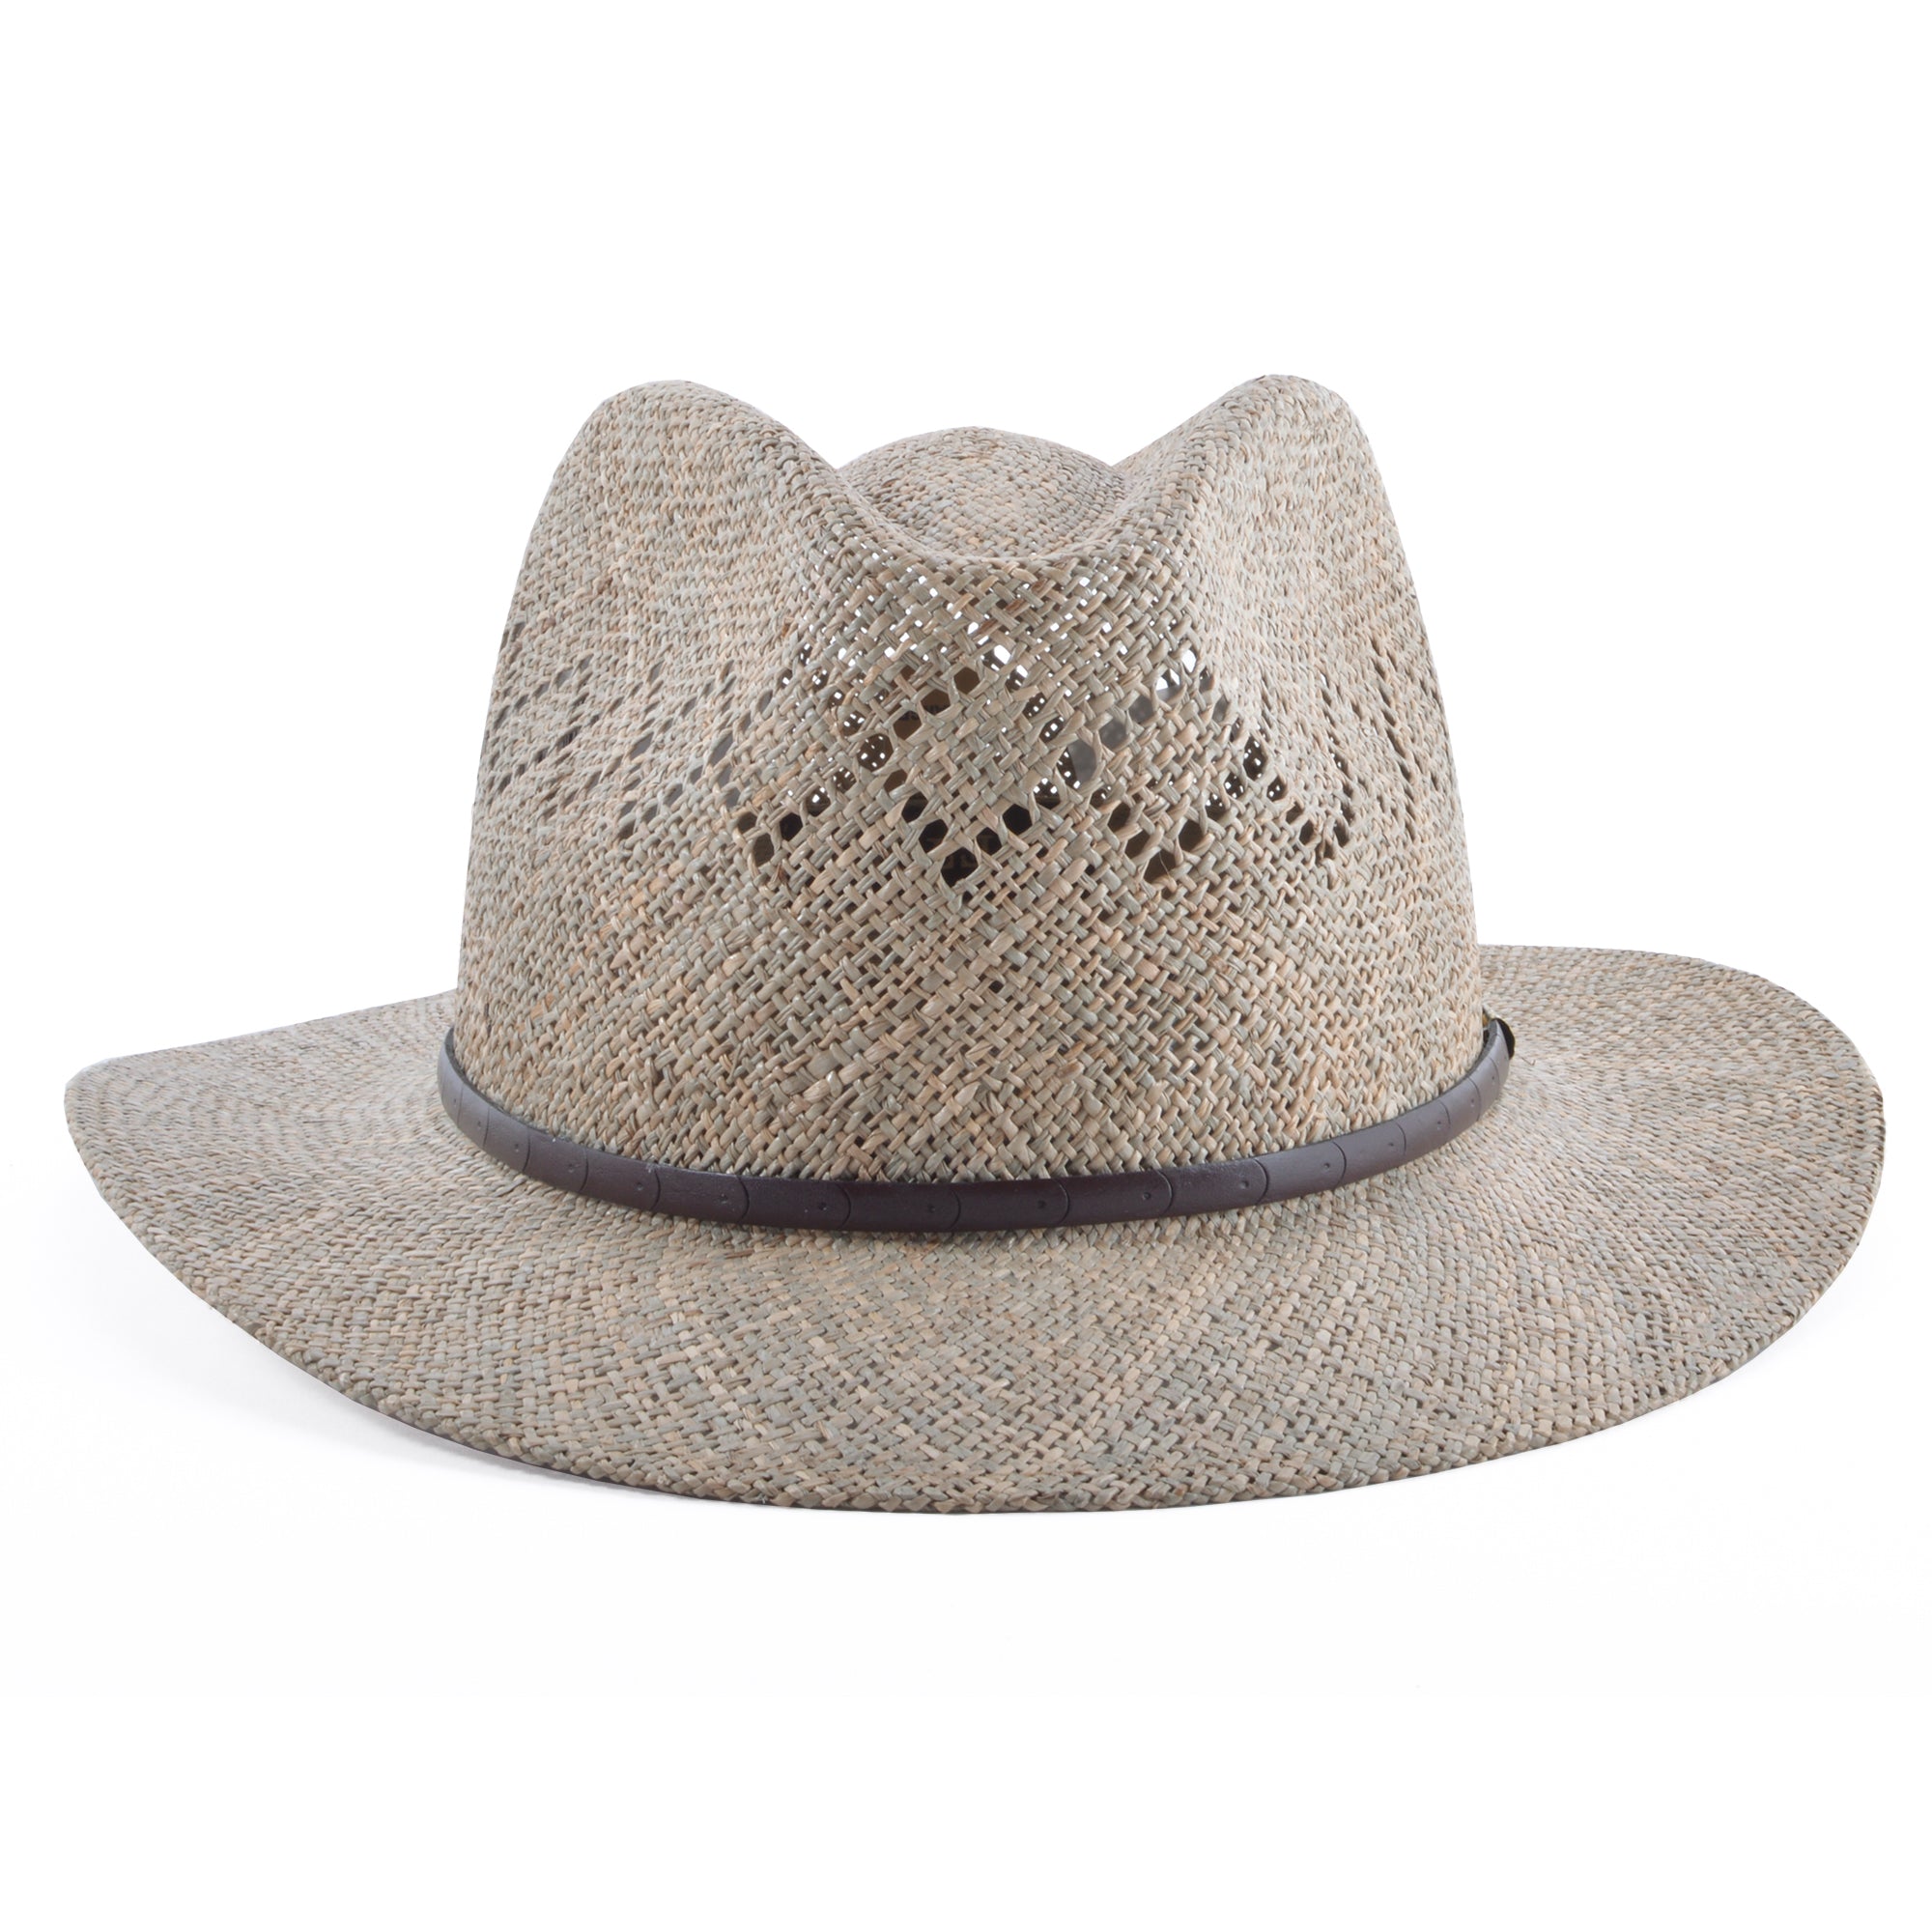 Stetson Creston Vented Seagrass Straw Hat